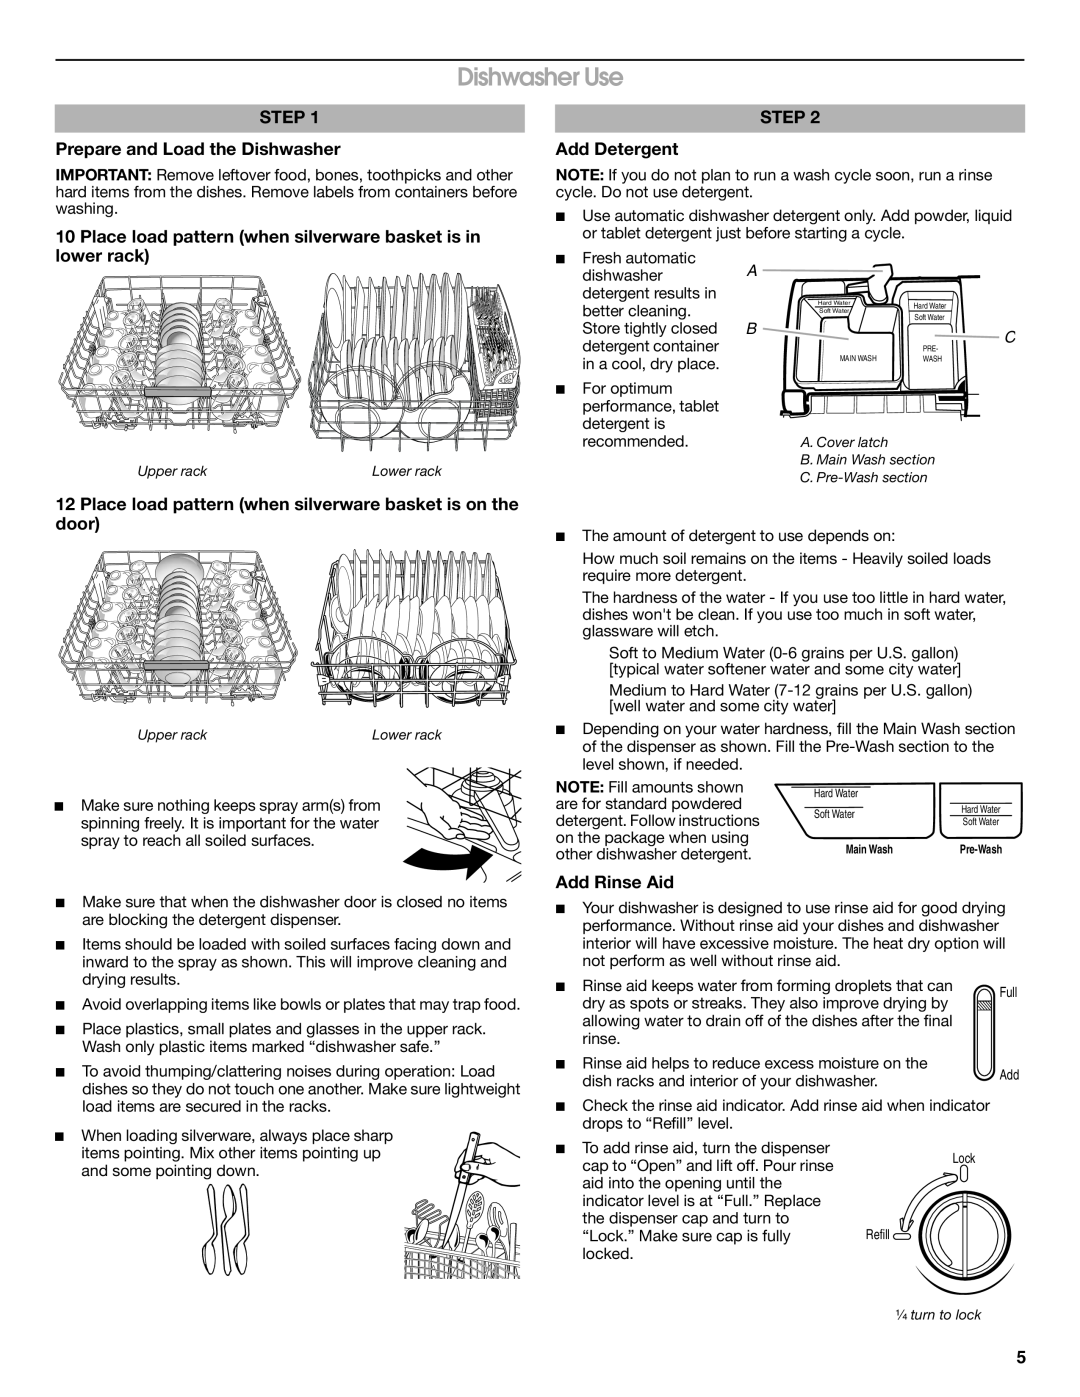 Amana ADB1100AWS, ADB1100AWW Dishwasher Use, STEP Prepare and Load the Dishwasher, STEP Add Detergent, Add Rinse Aid 